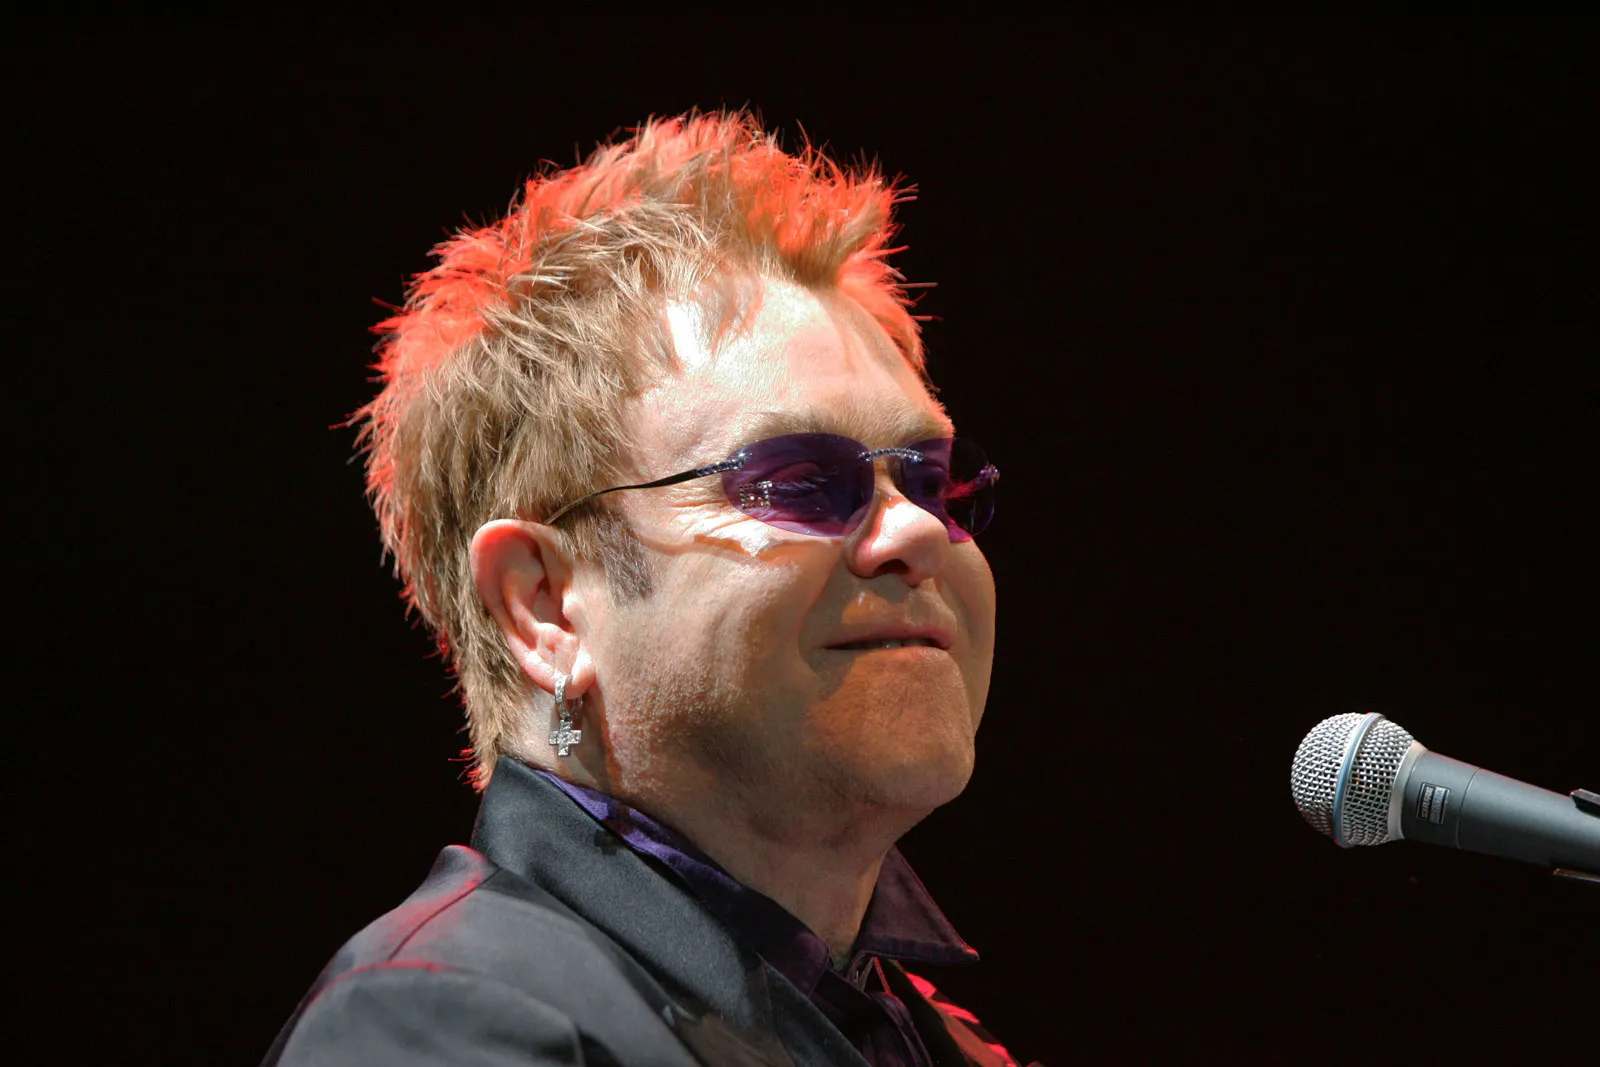 What Happened To Elton John?